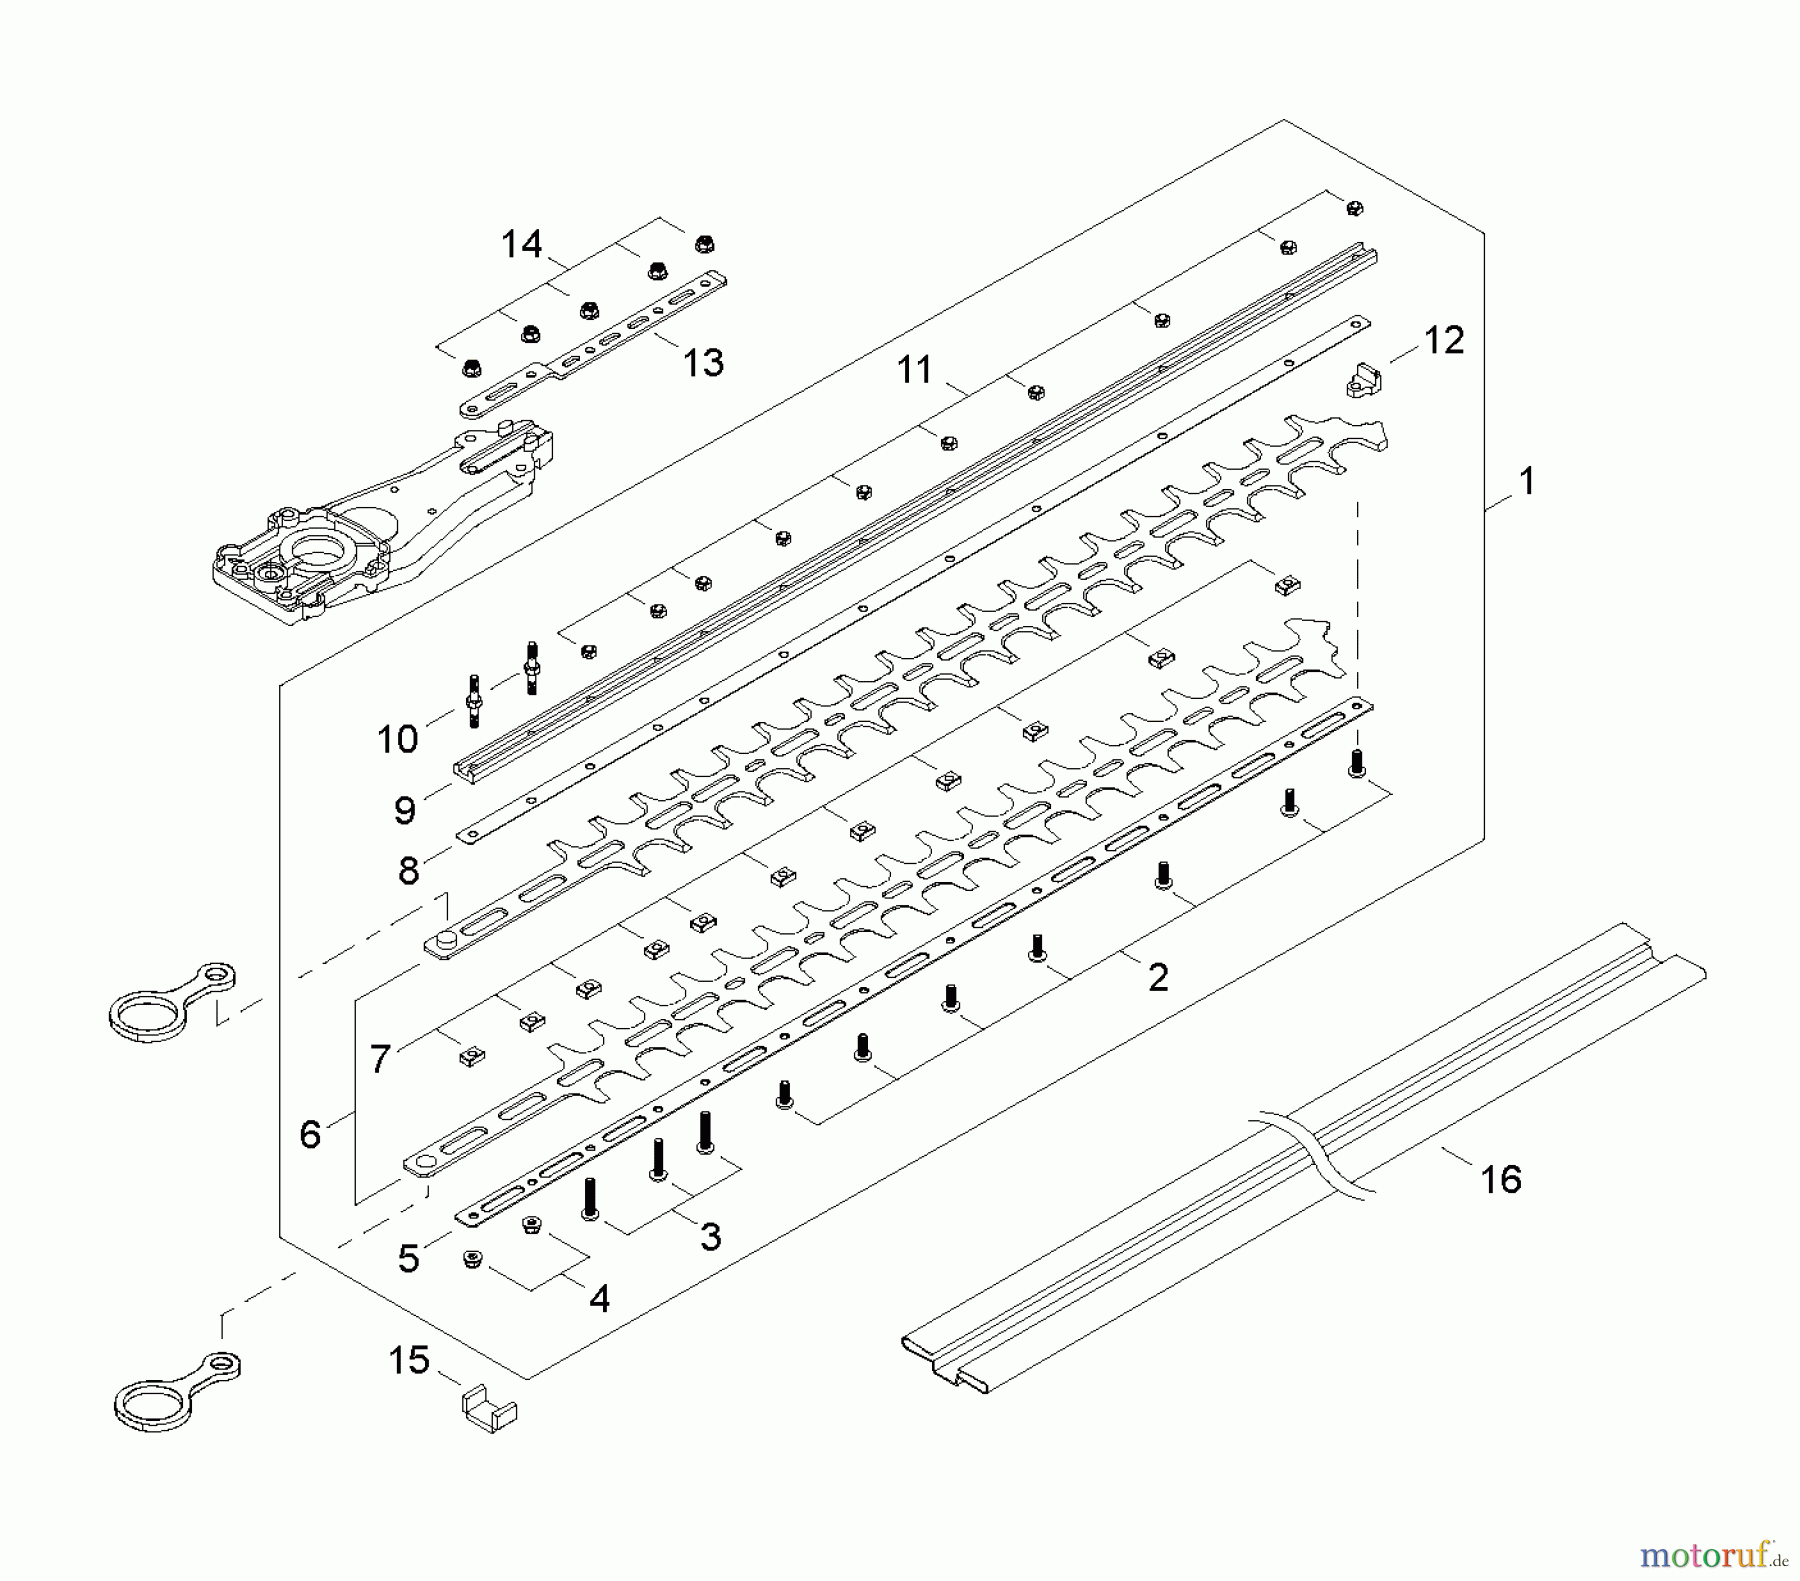  Shindaiwa Heckenscheren DH2510 - Shindaiwa Hedge Trimmer, Dual-Sided 30